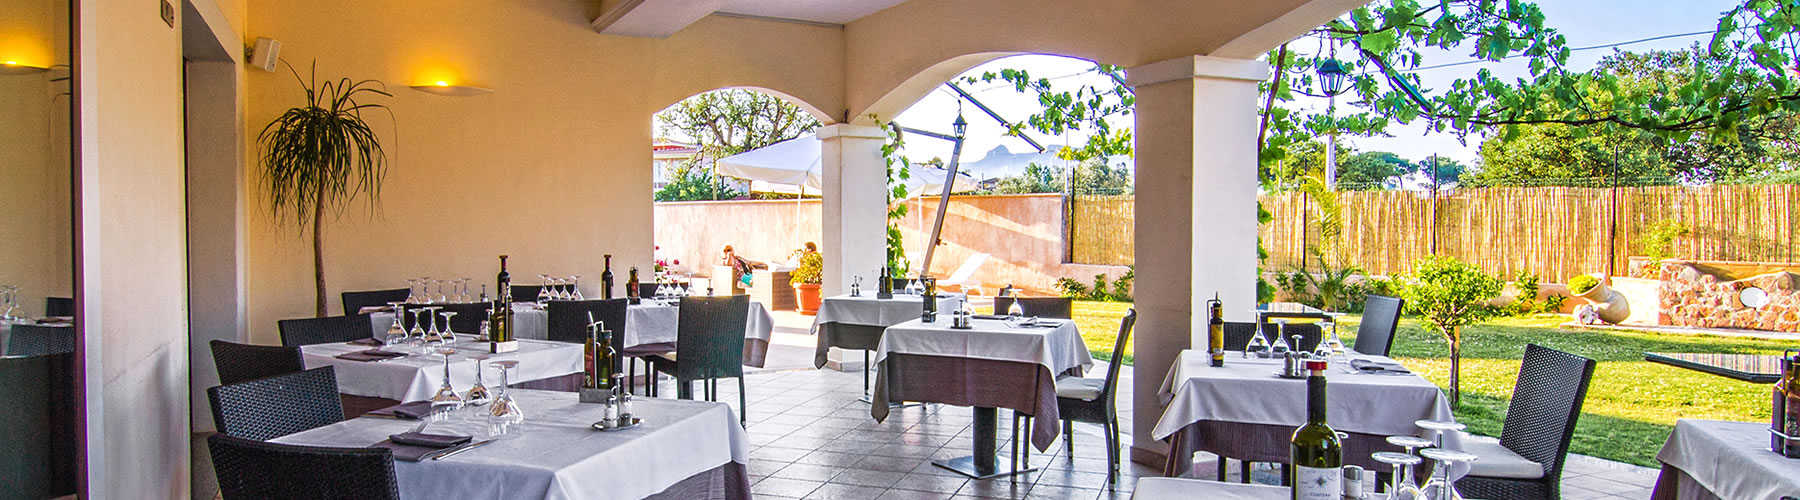 Hotel La Perla Restaurant - Eat with gusto in Arbatax